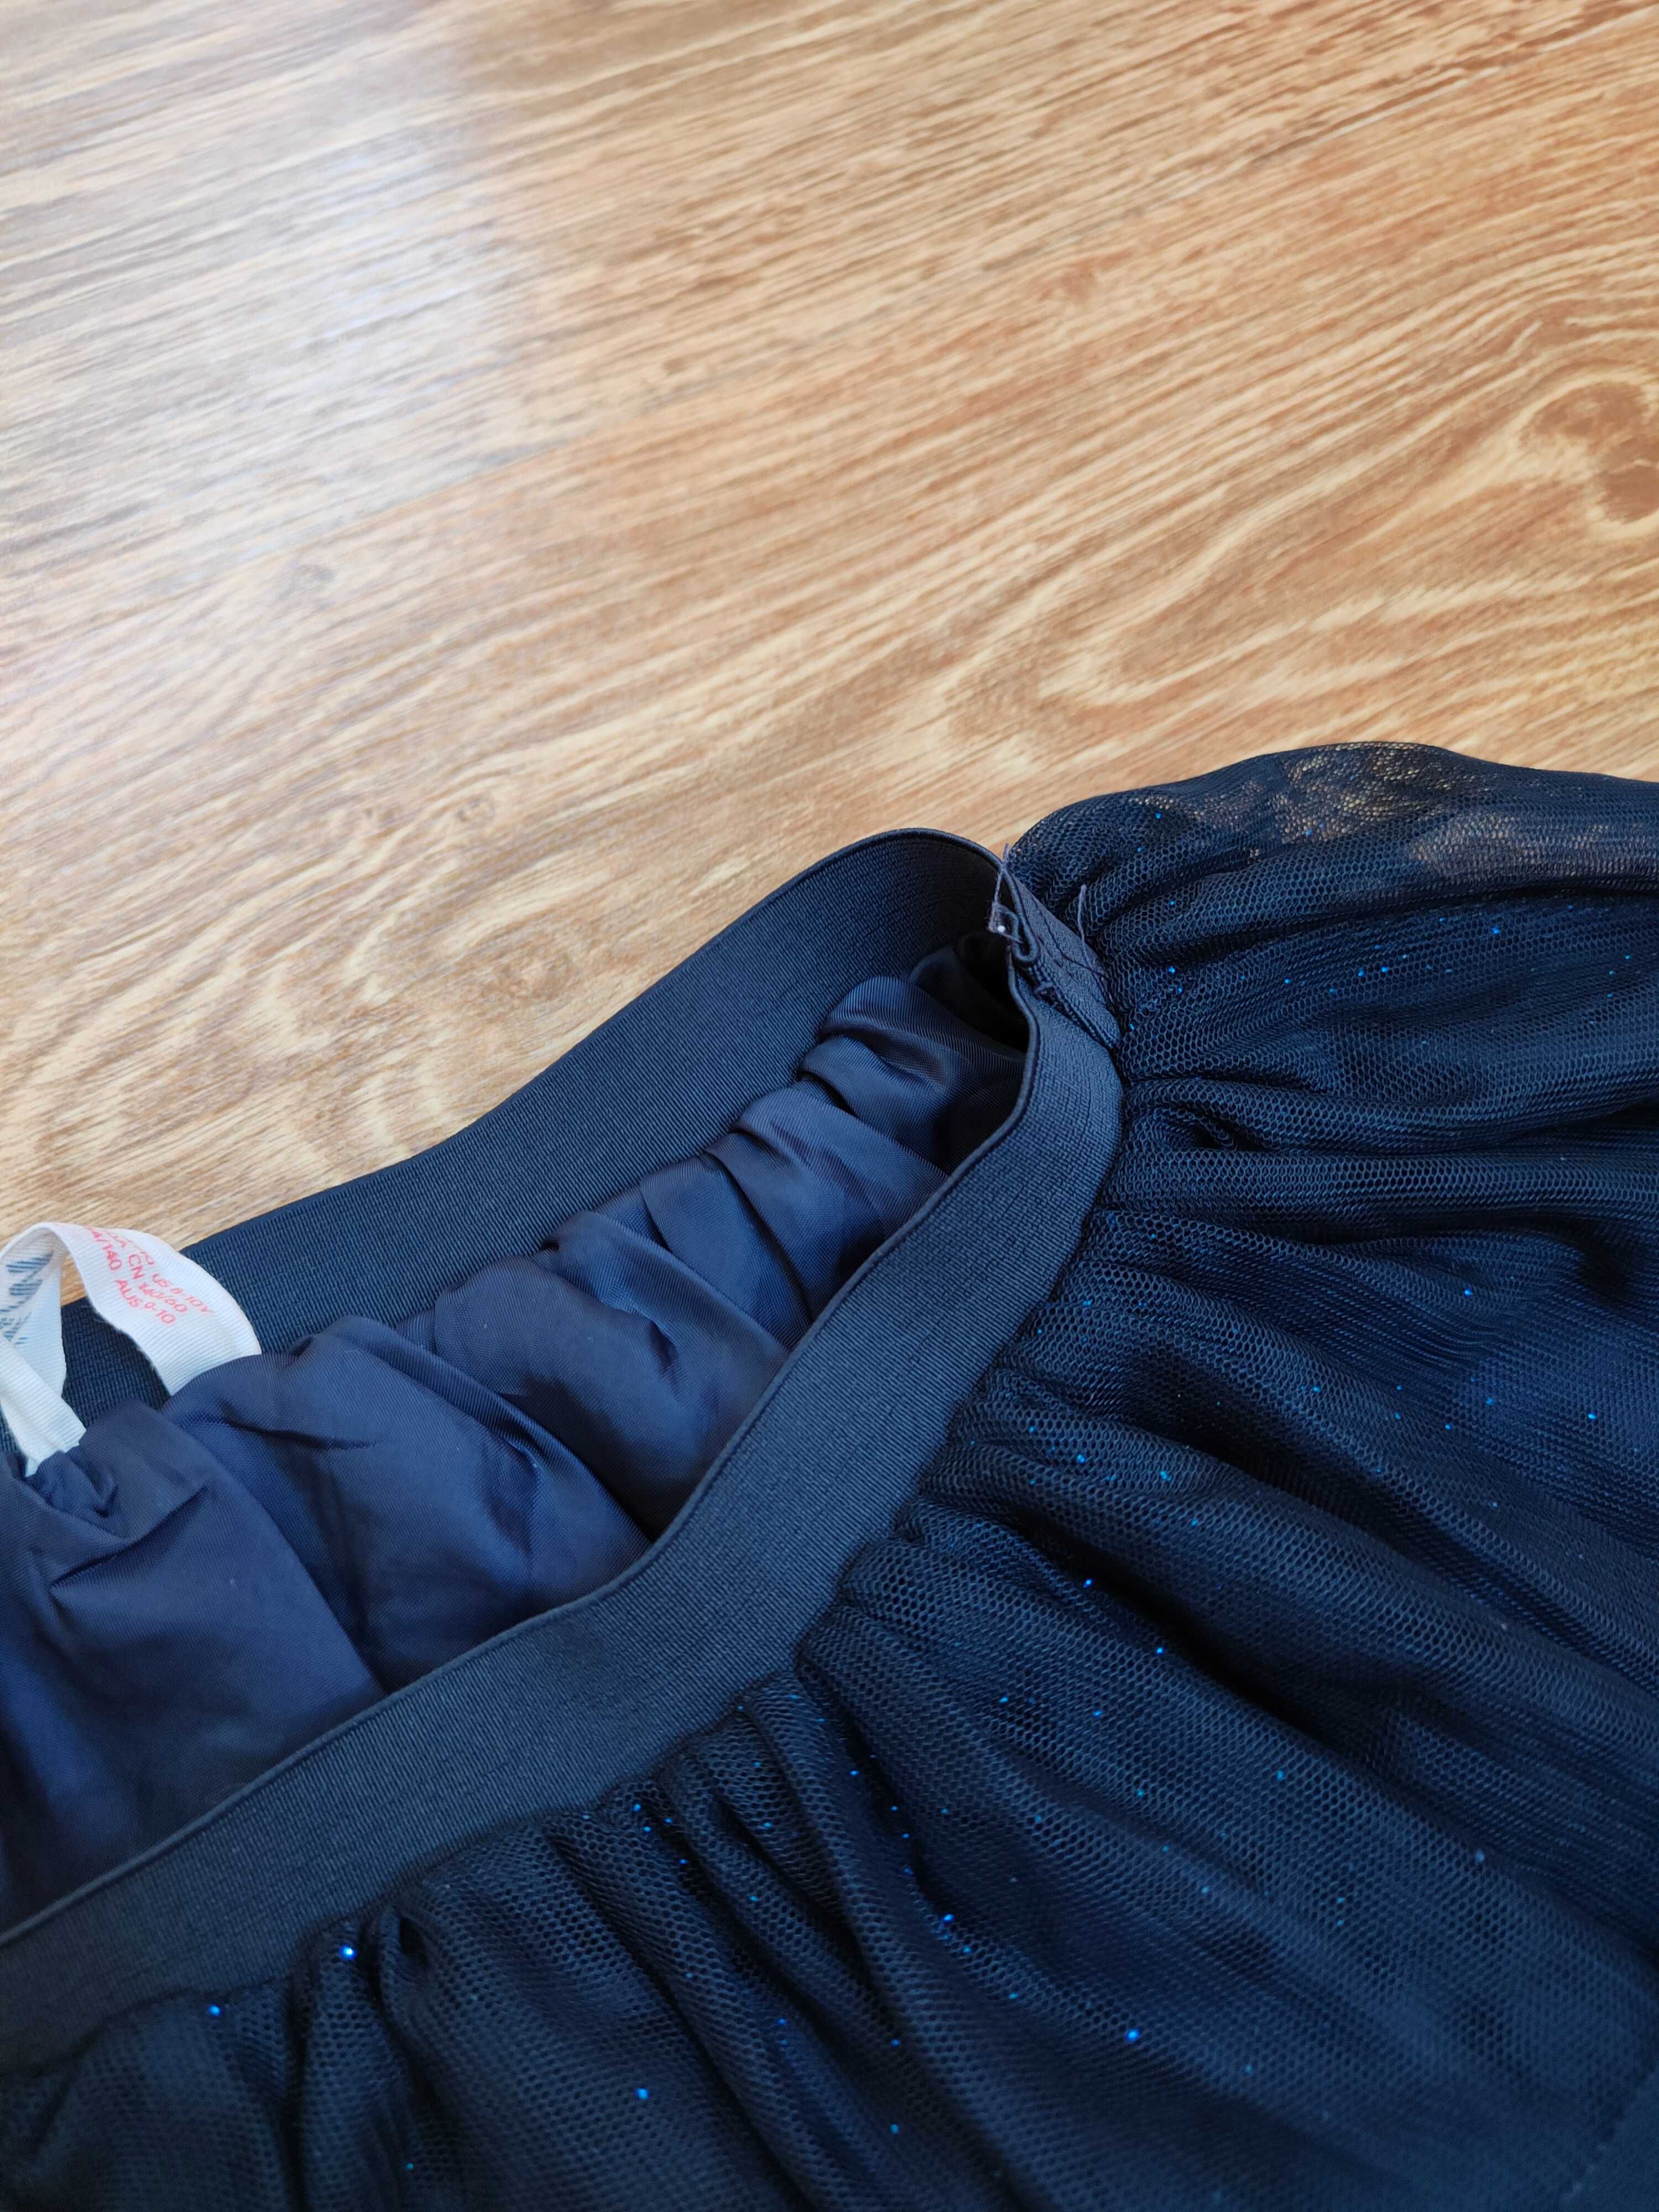 Granatowa spódnica tiulowa H&M rozmiar 134-140 cm 8-10 lat